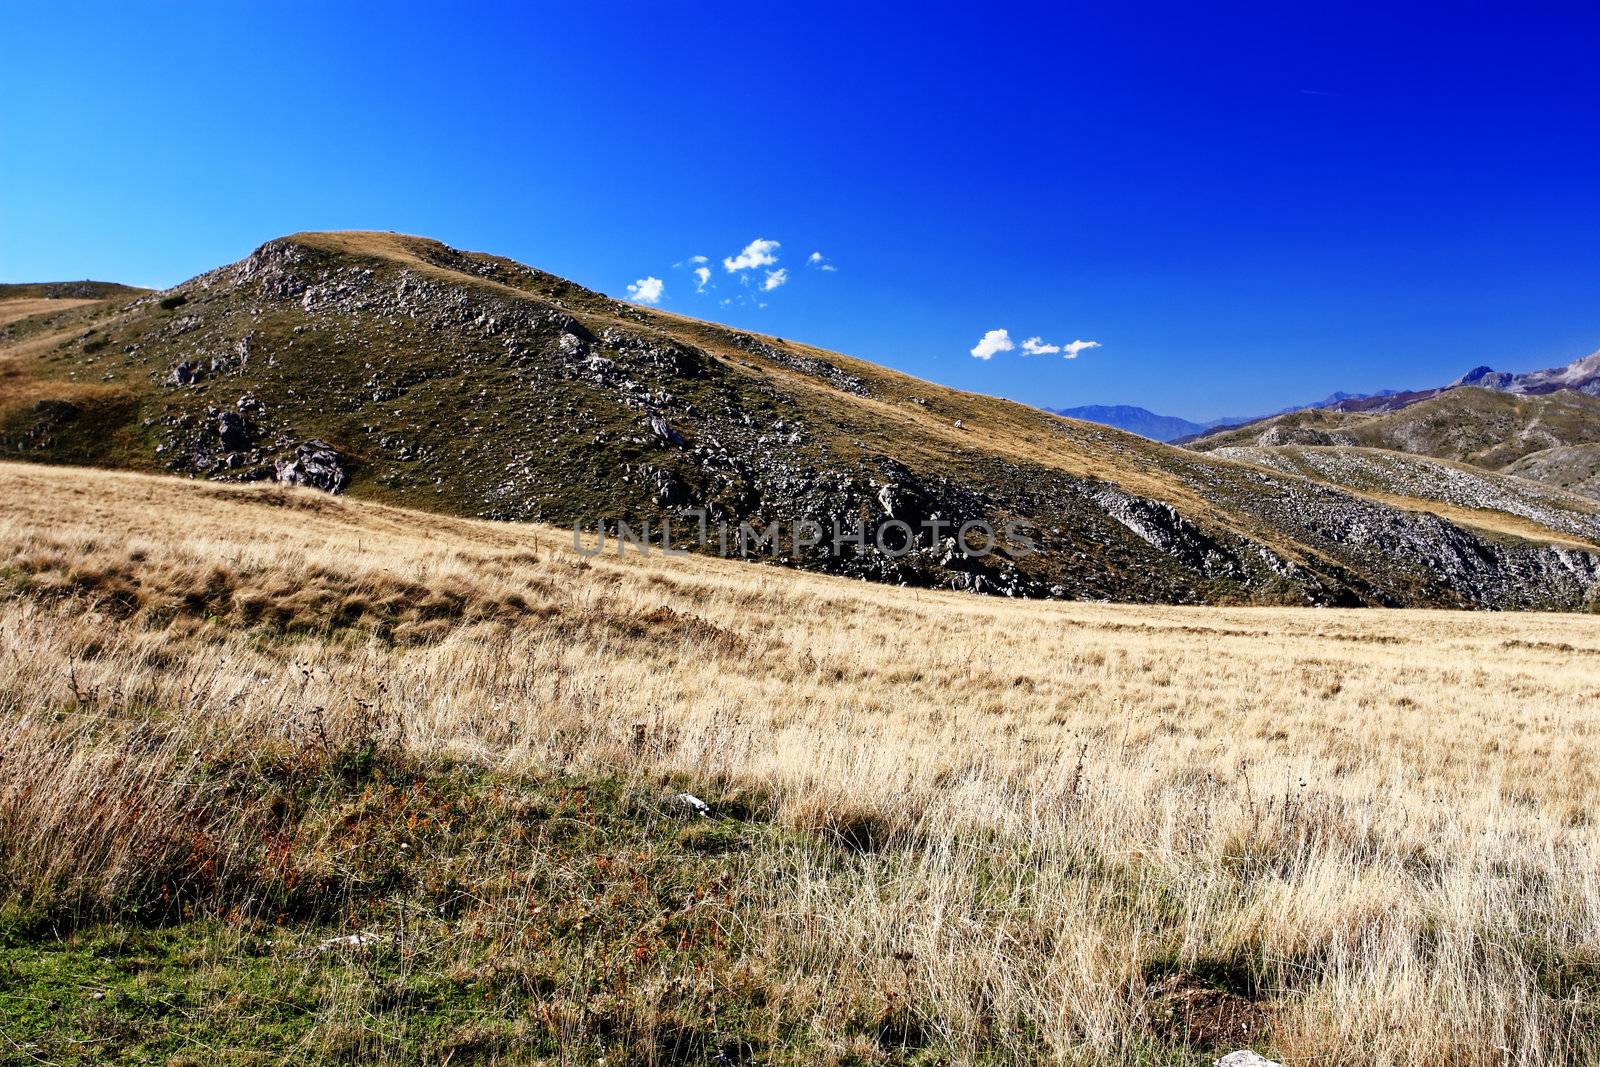 Landscape from the Mavrovo Region in Macedonia